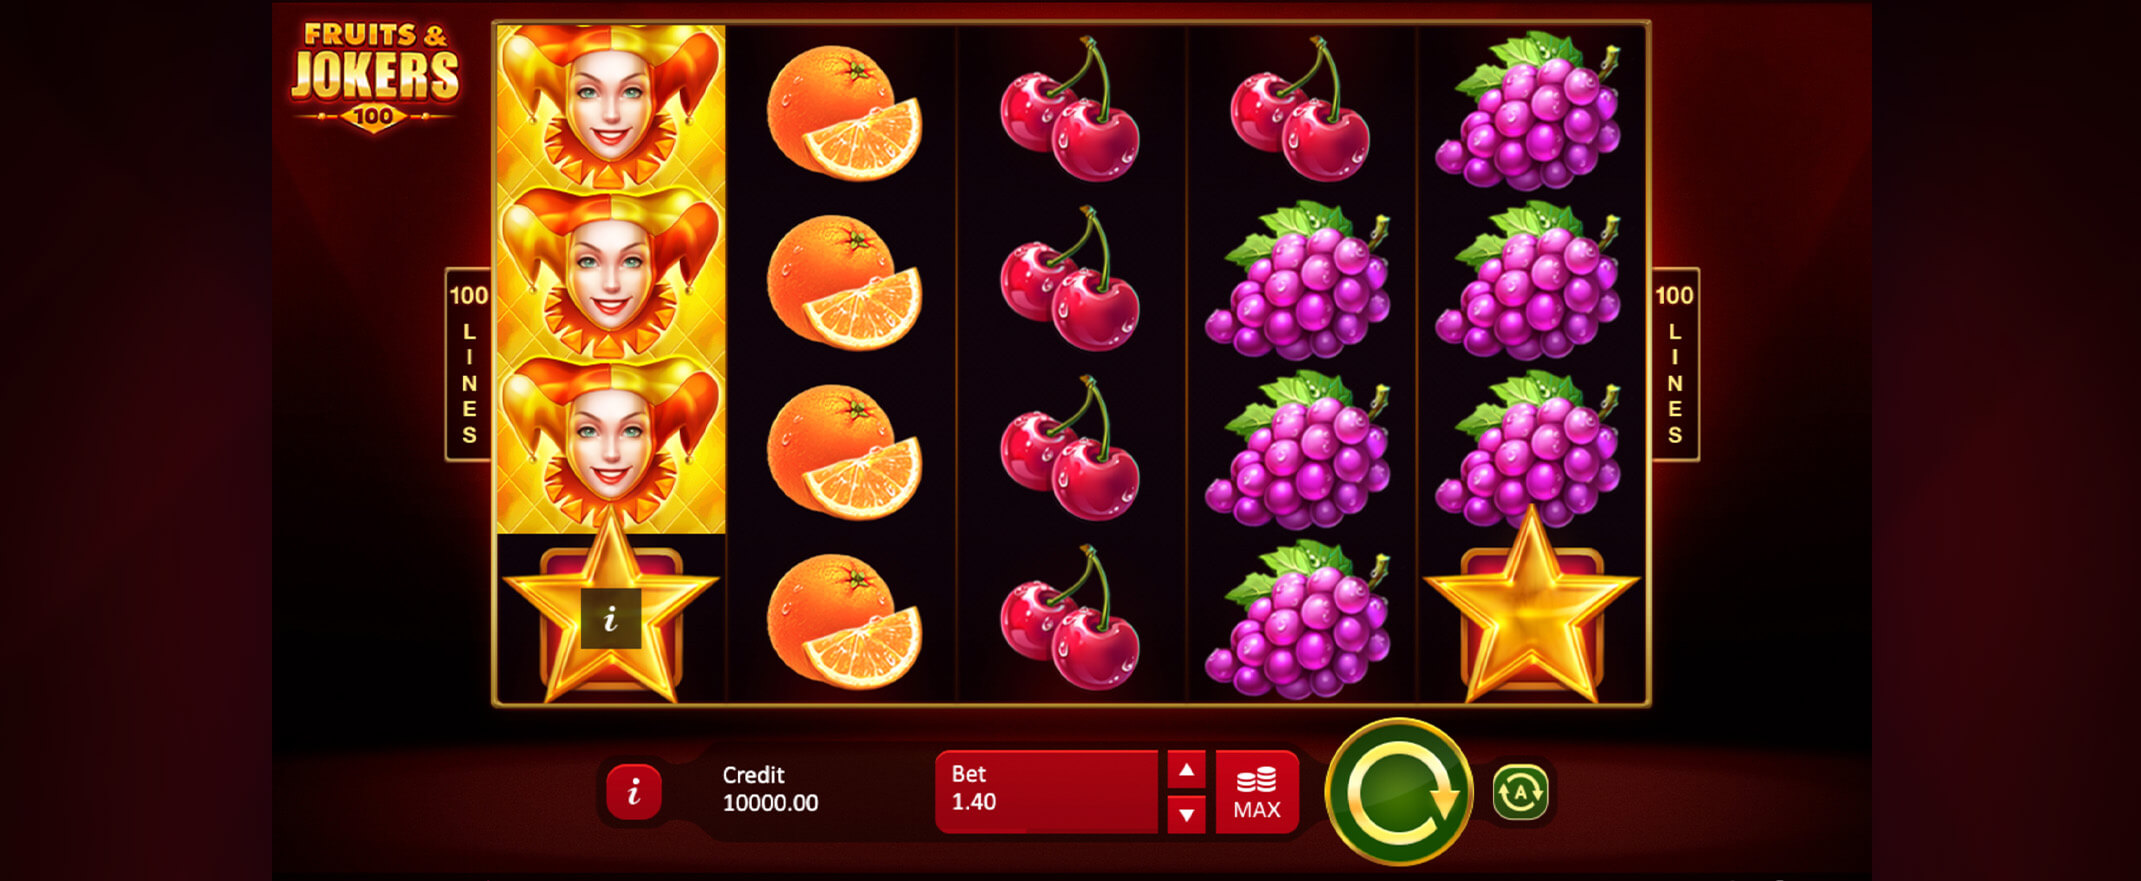 Fruits & Jokers: 100 lines Spielautomat von Playson